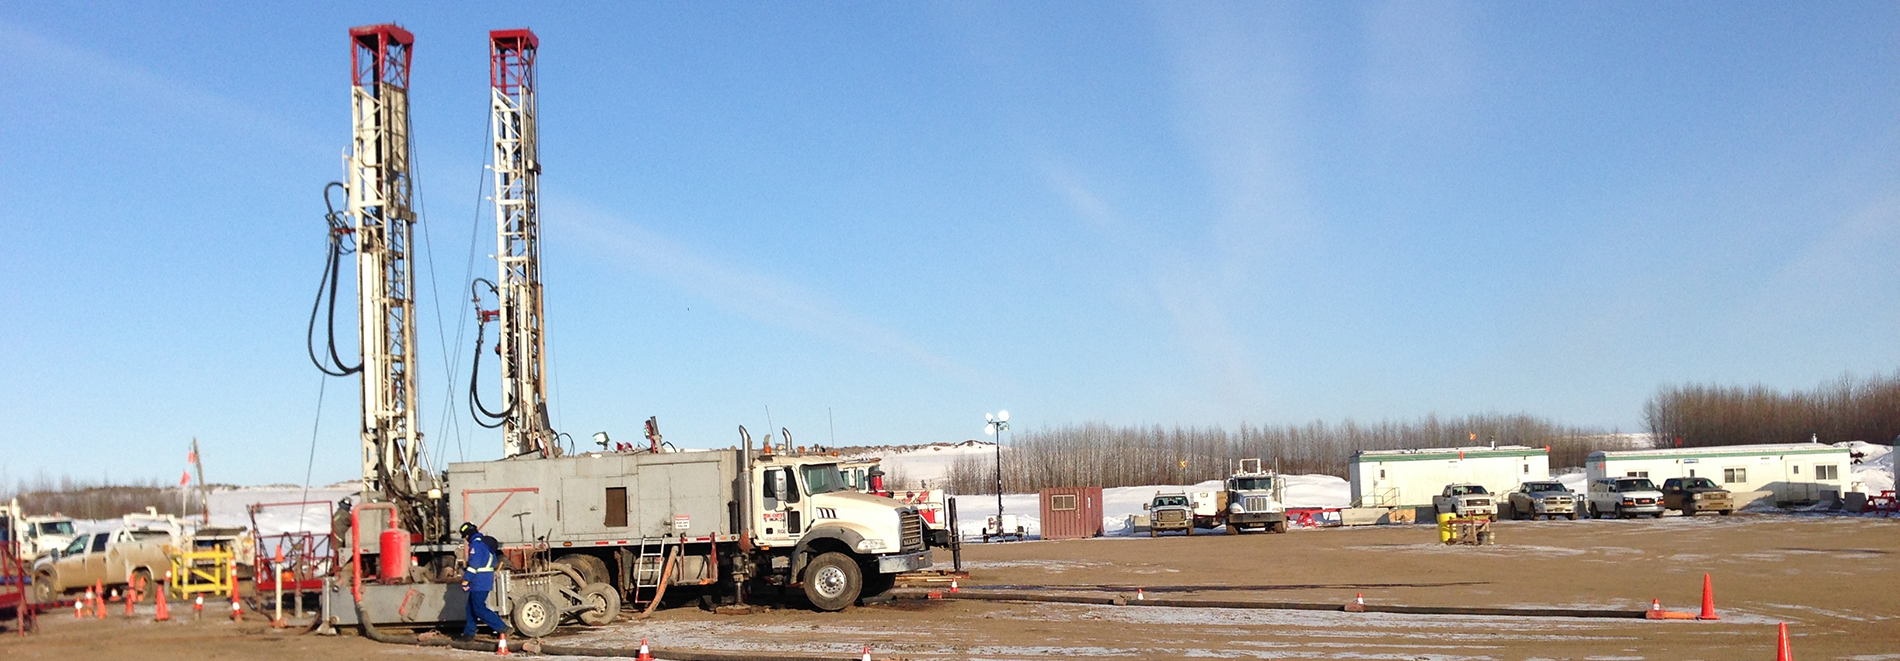 Oilsands & Drilling Equipment Alberta